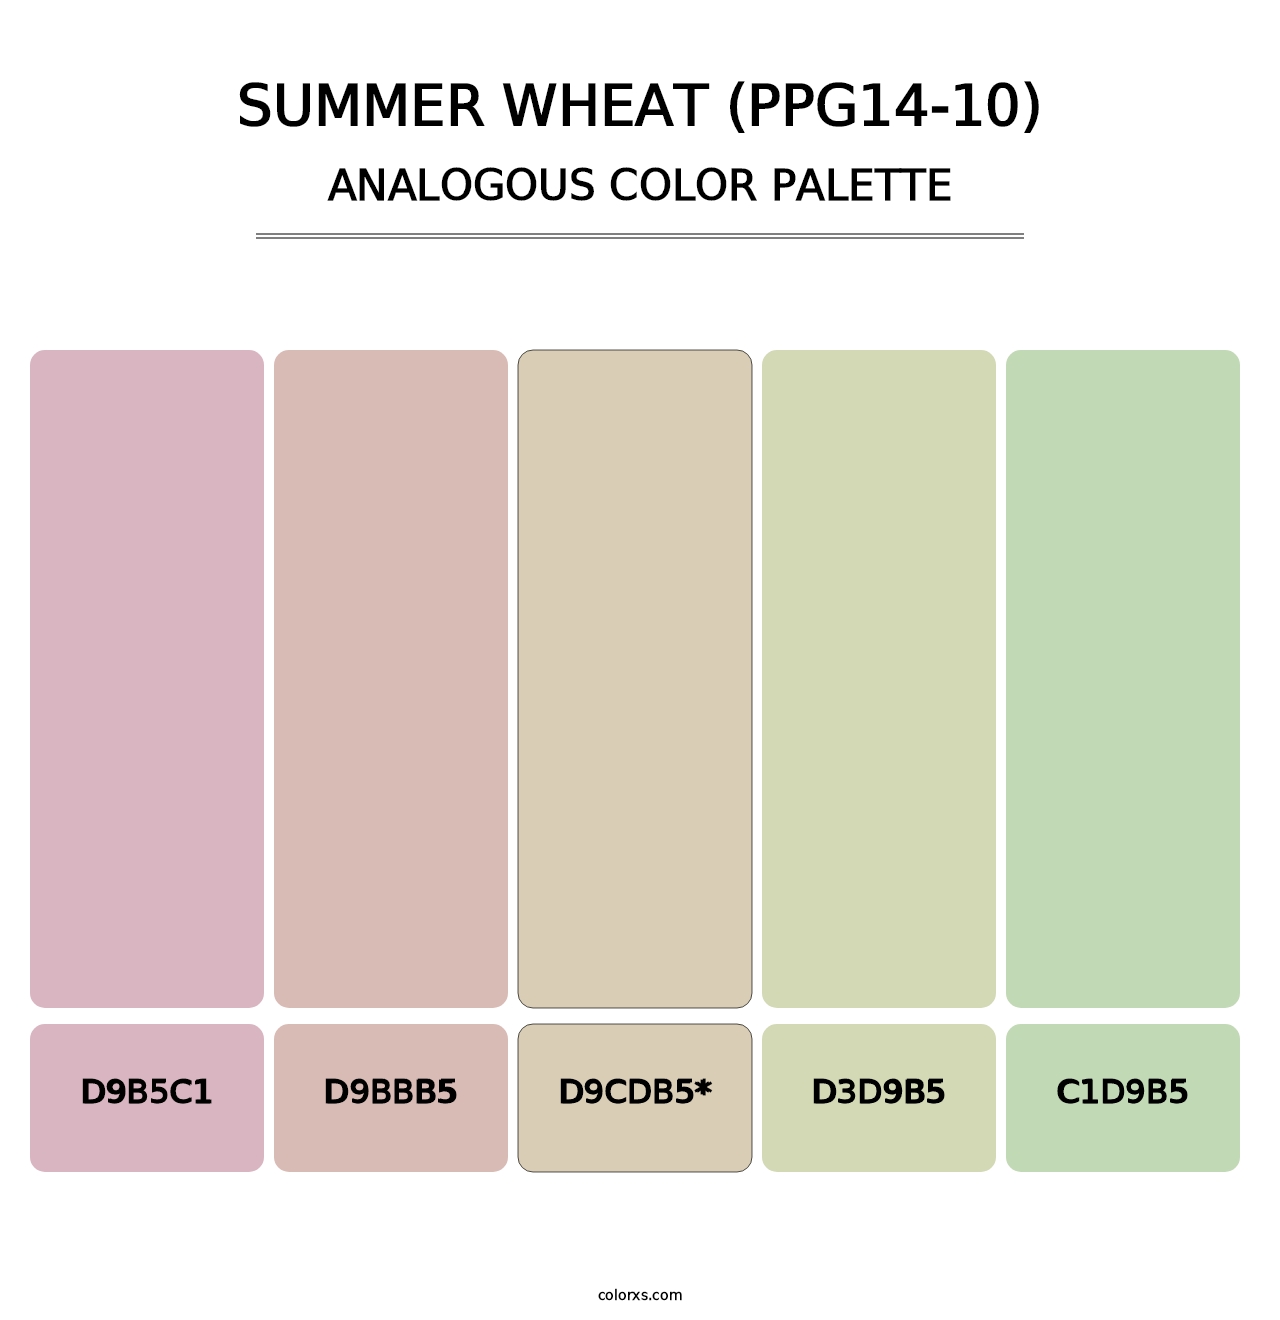 Summer Wheat (PPG14-10) - Analogous Color Palette